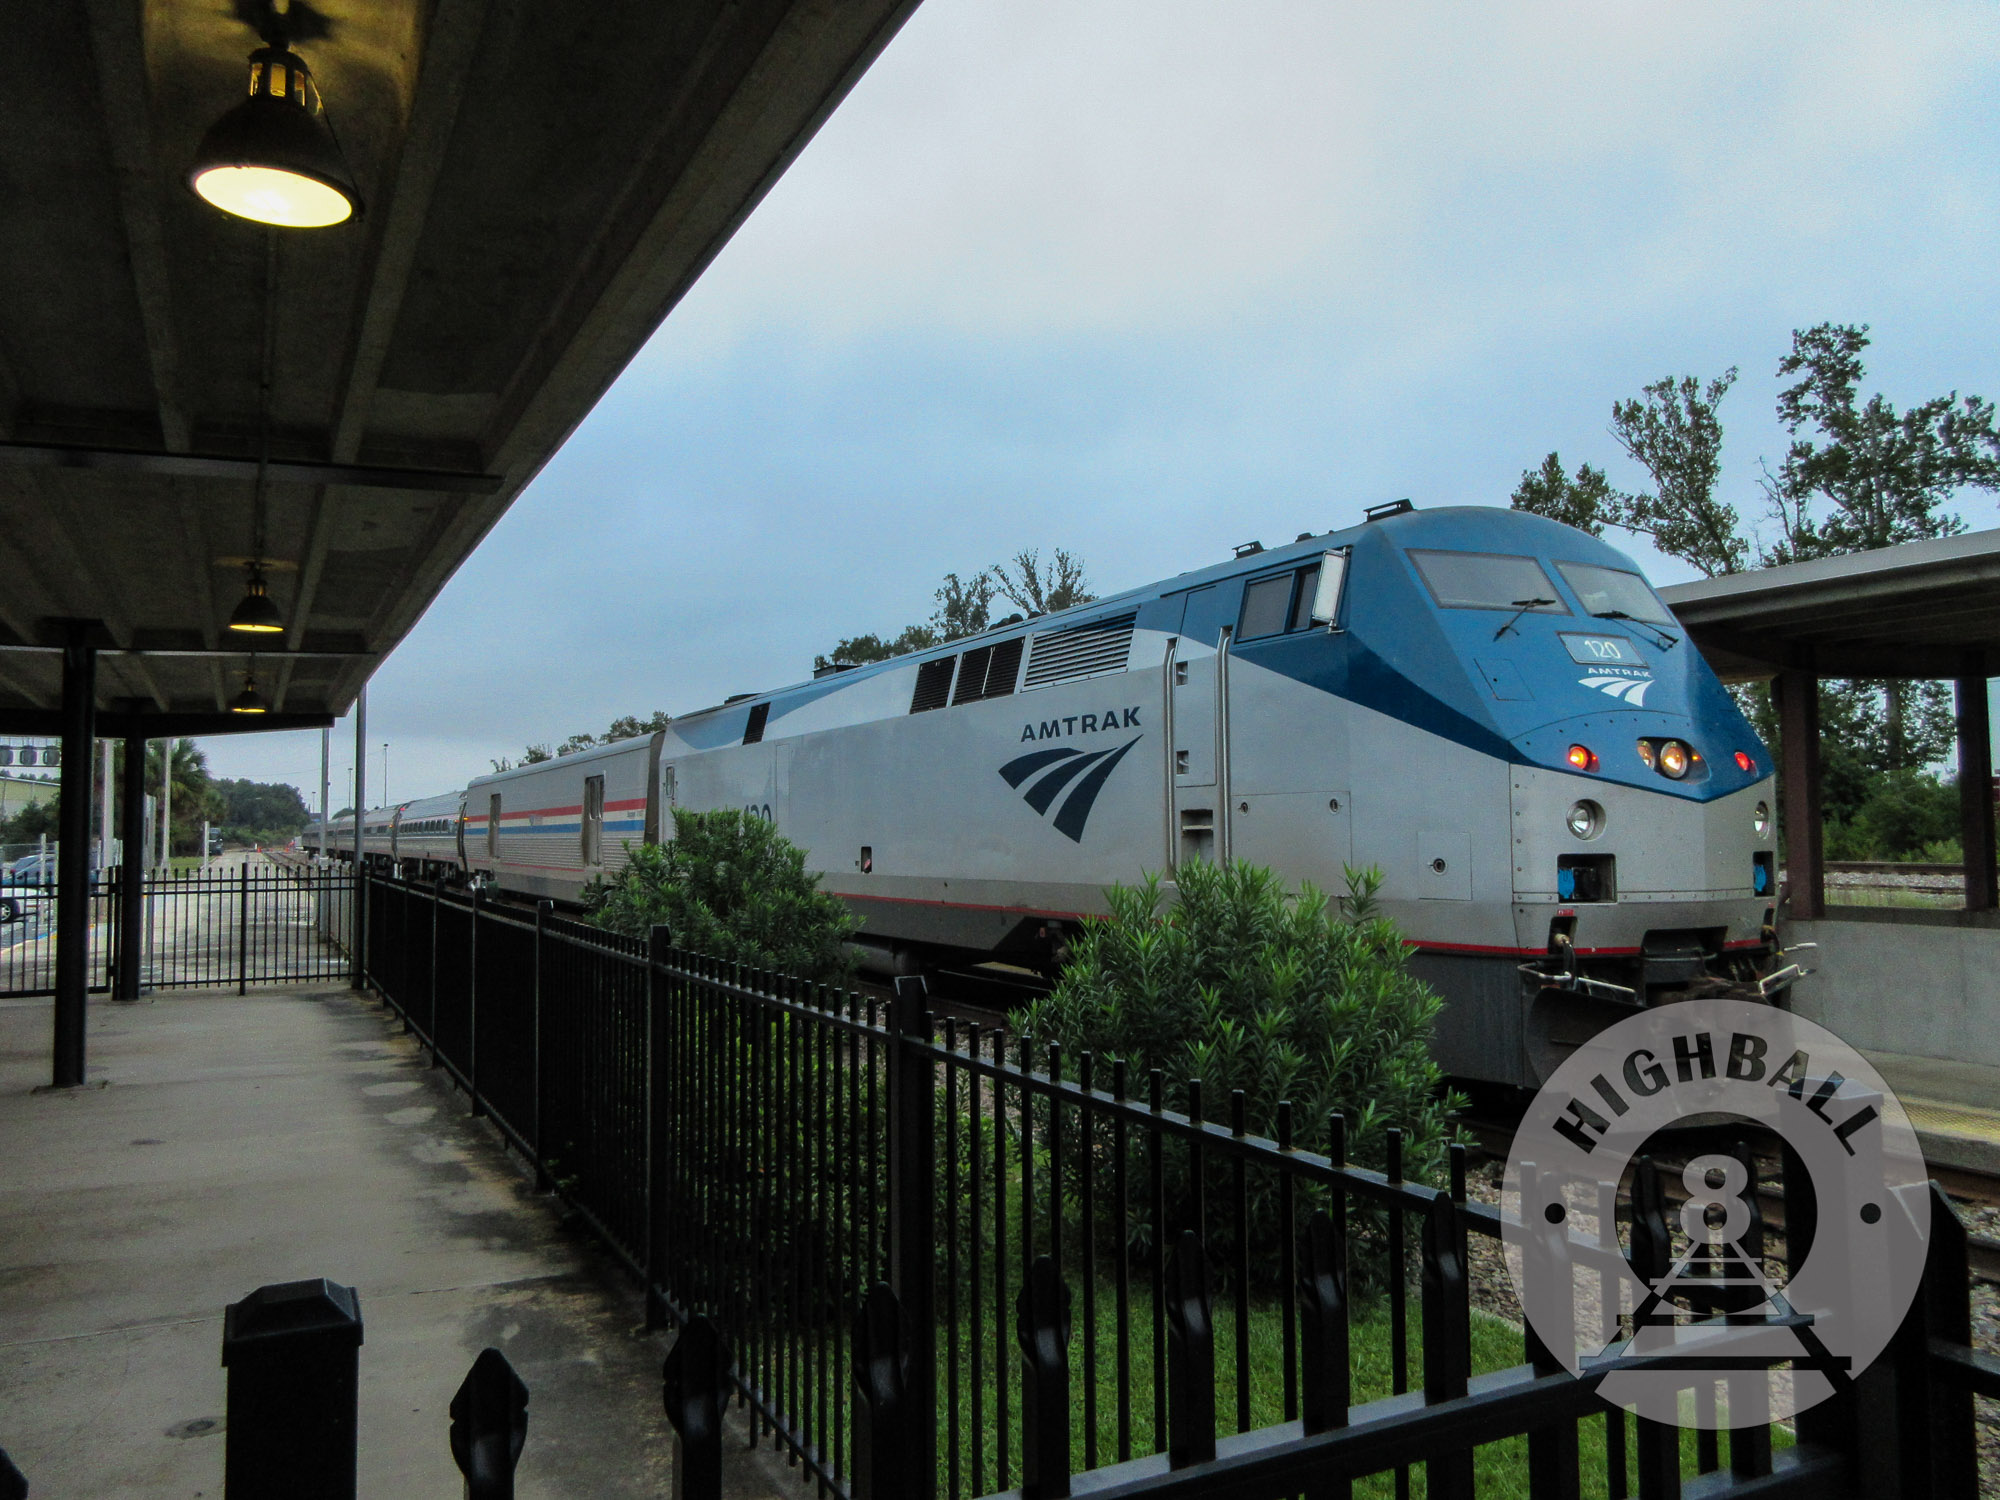 The Amtrak Palmetto at Savannah Station, Savannah, Georgia, USA, 2015.